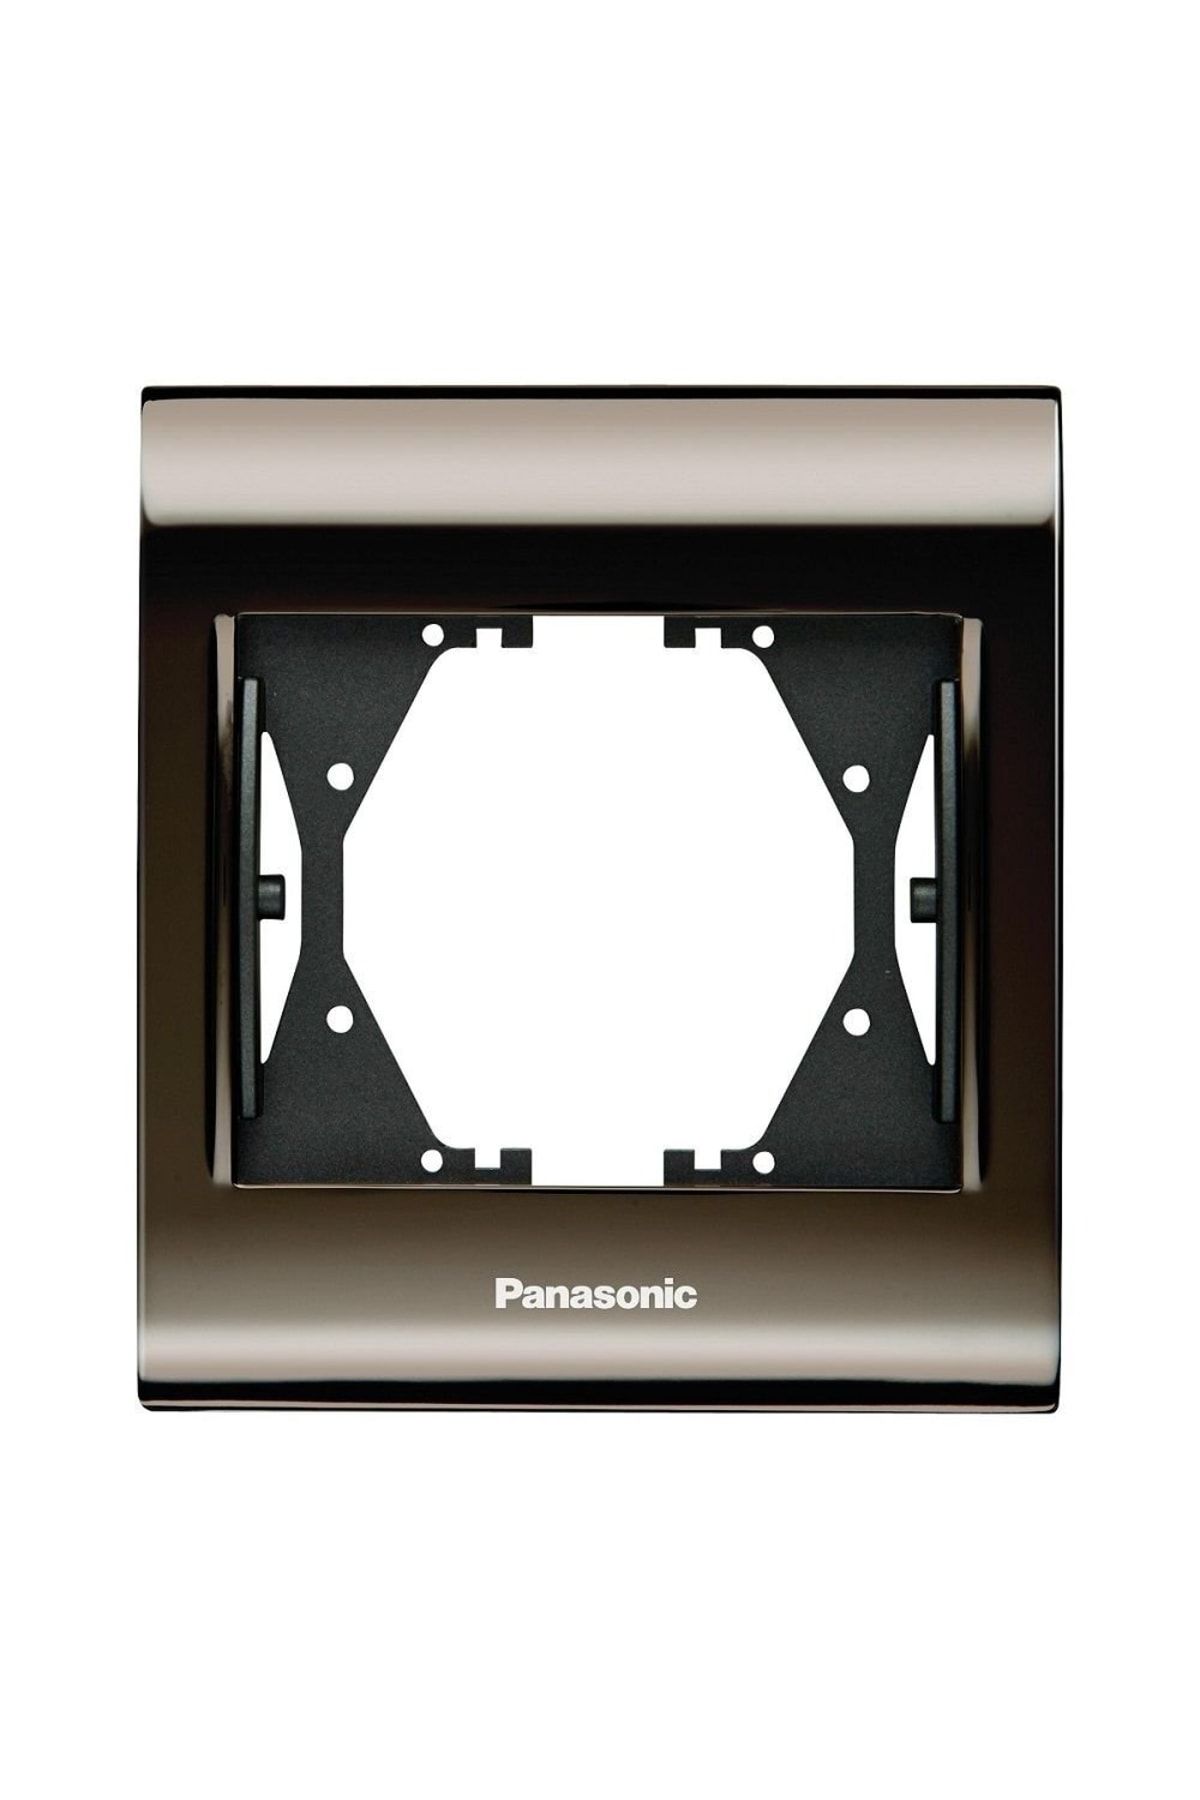 Panasonic Thea Blu Una+füme Tekli Çerçeve - Wbtf08015un-tr